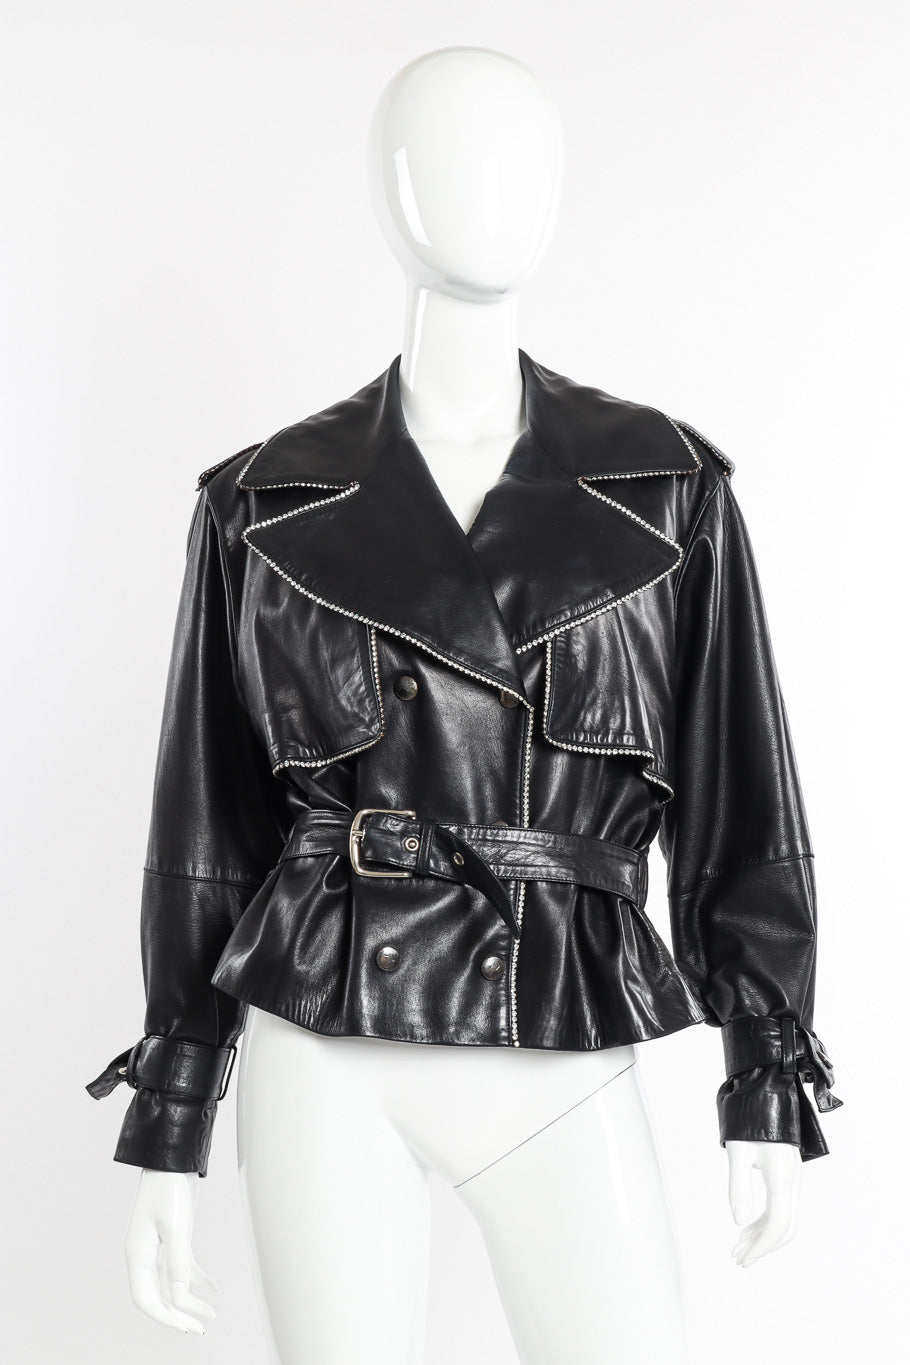 Vintage Charles Jourdan Leather Rhinestone Jacket front on mannequin @recessla